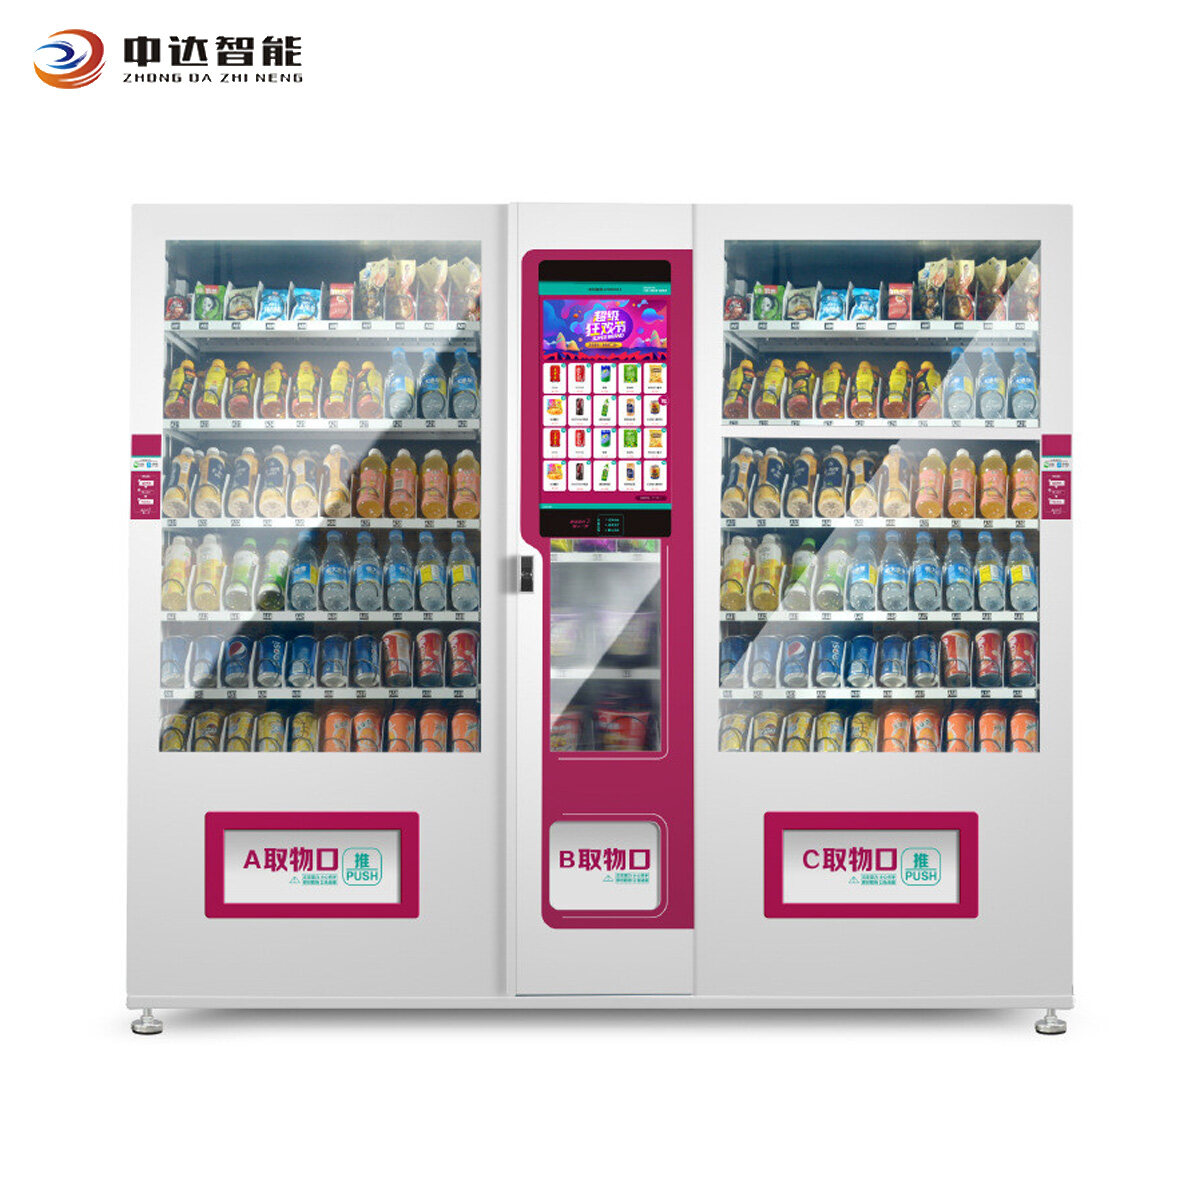 Coin vending machine